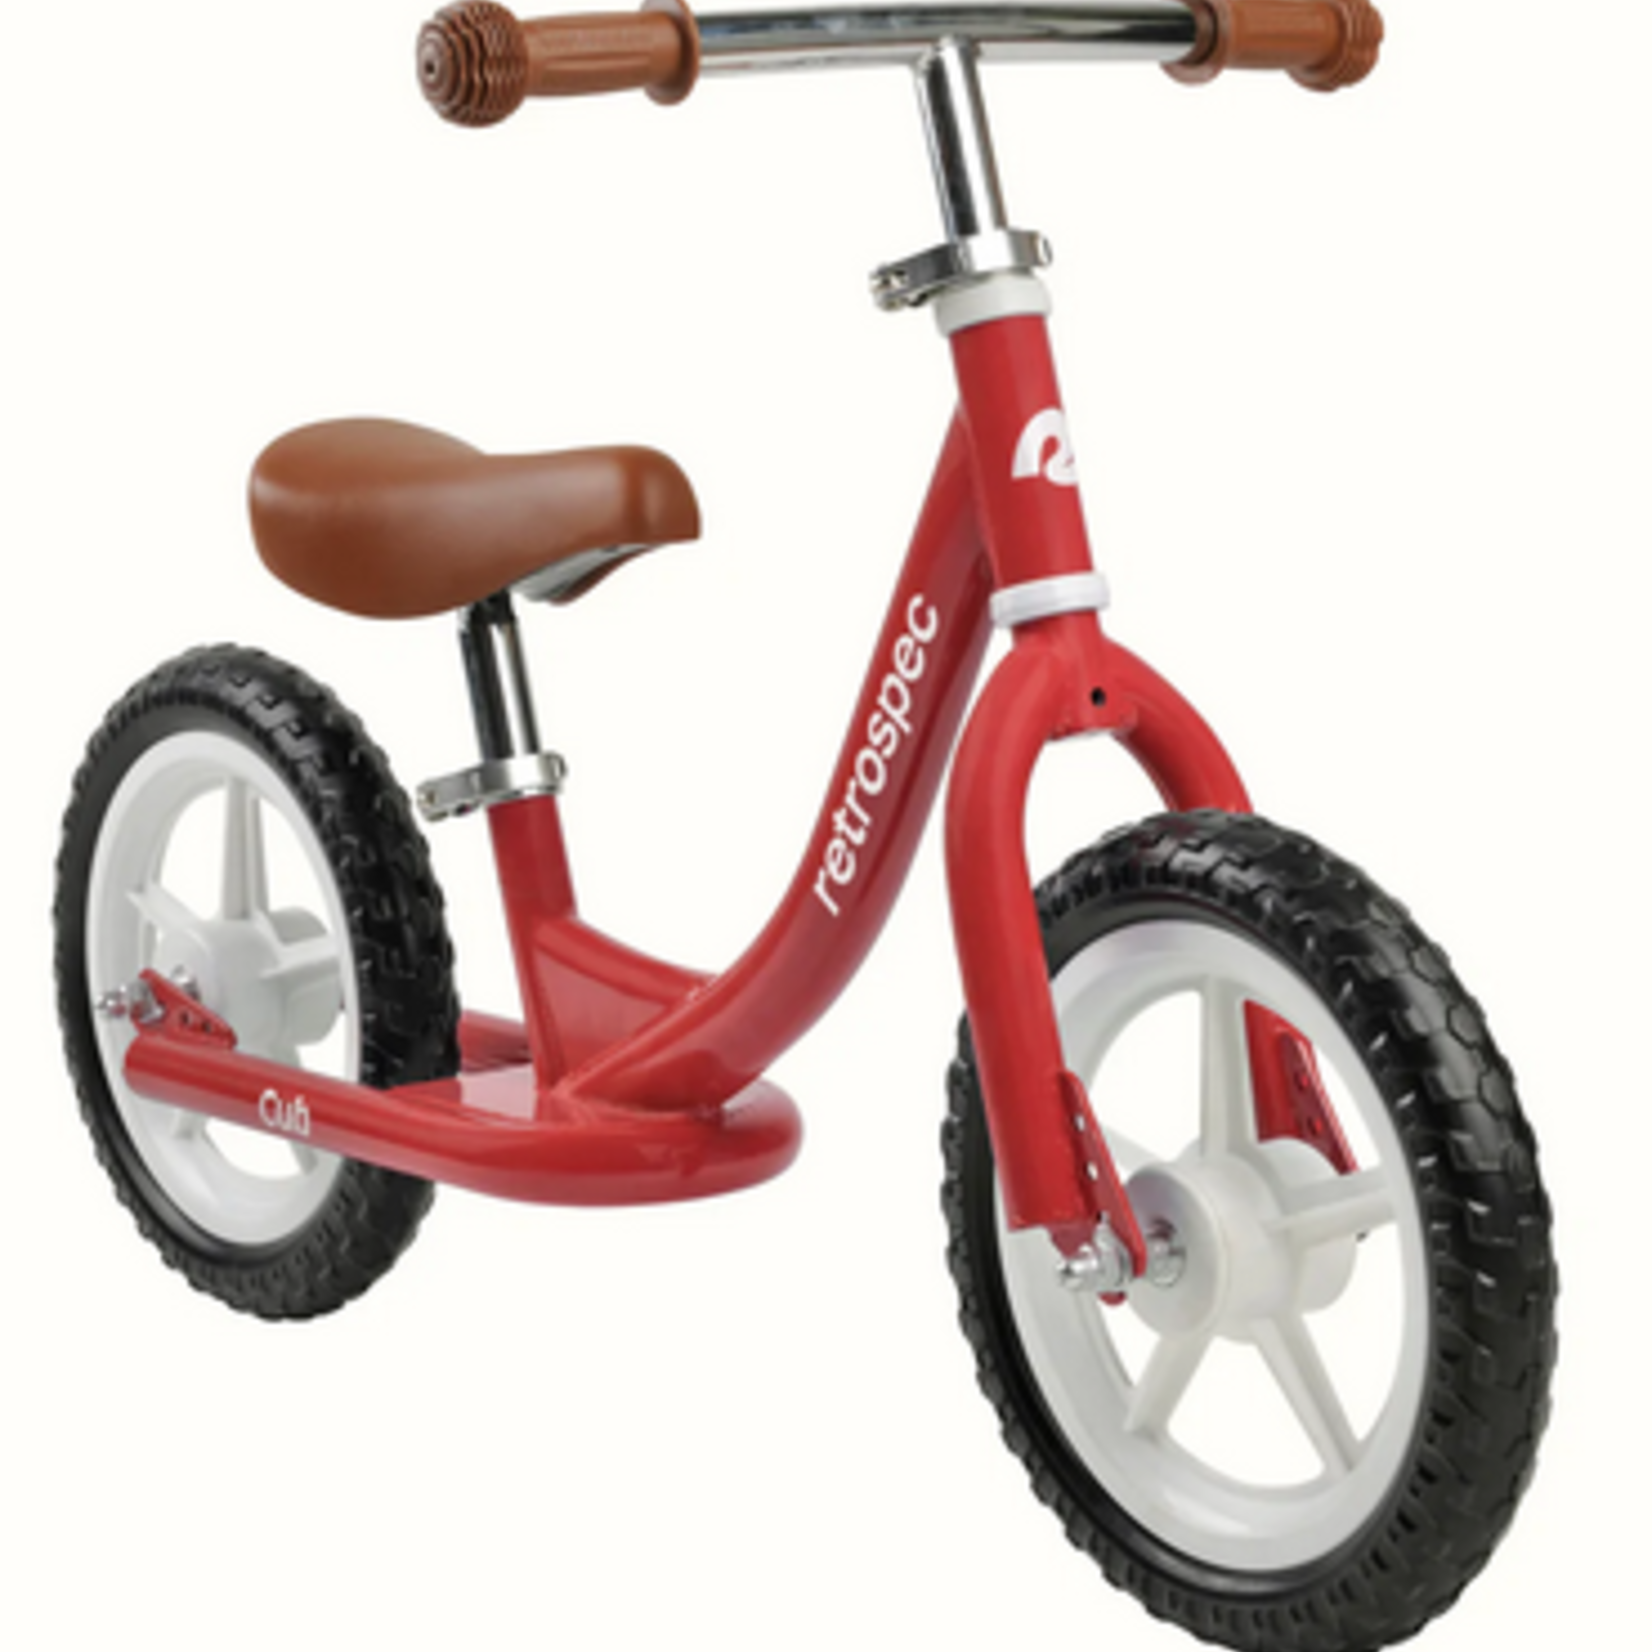 RetroSpec Retrospec - Cub 12" Kids Balance Bike